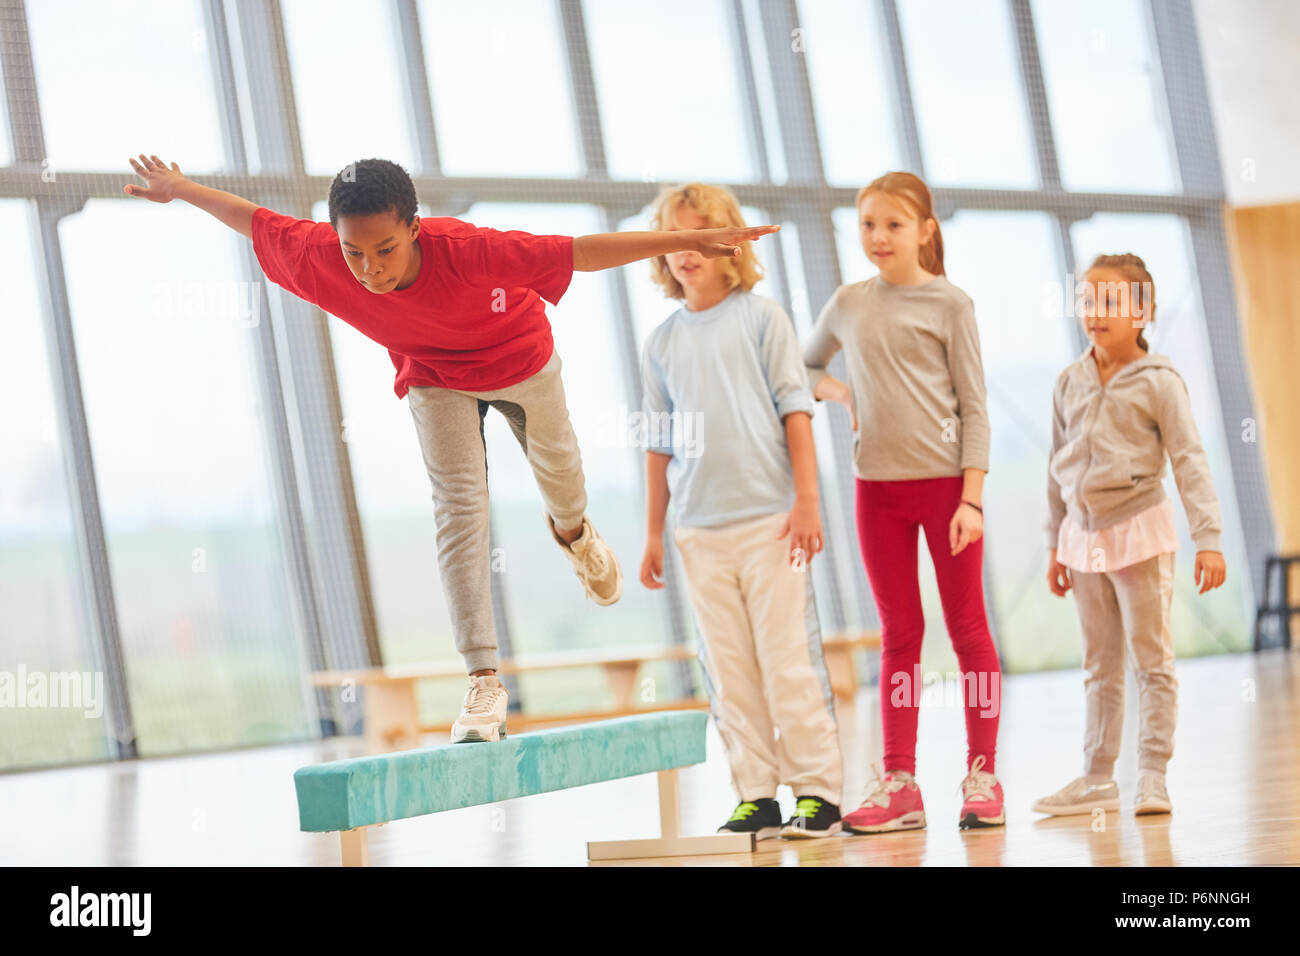 Children do school sports and balance on a balance beam Stock Photo